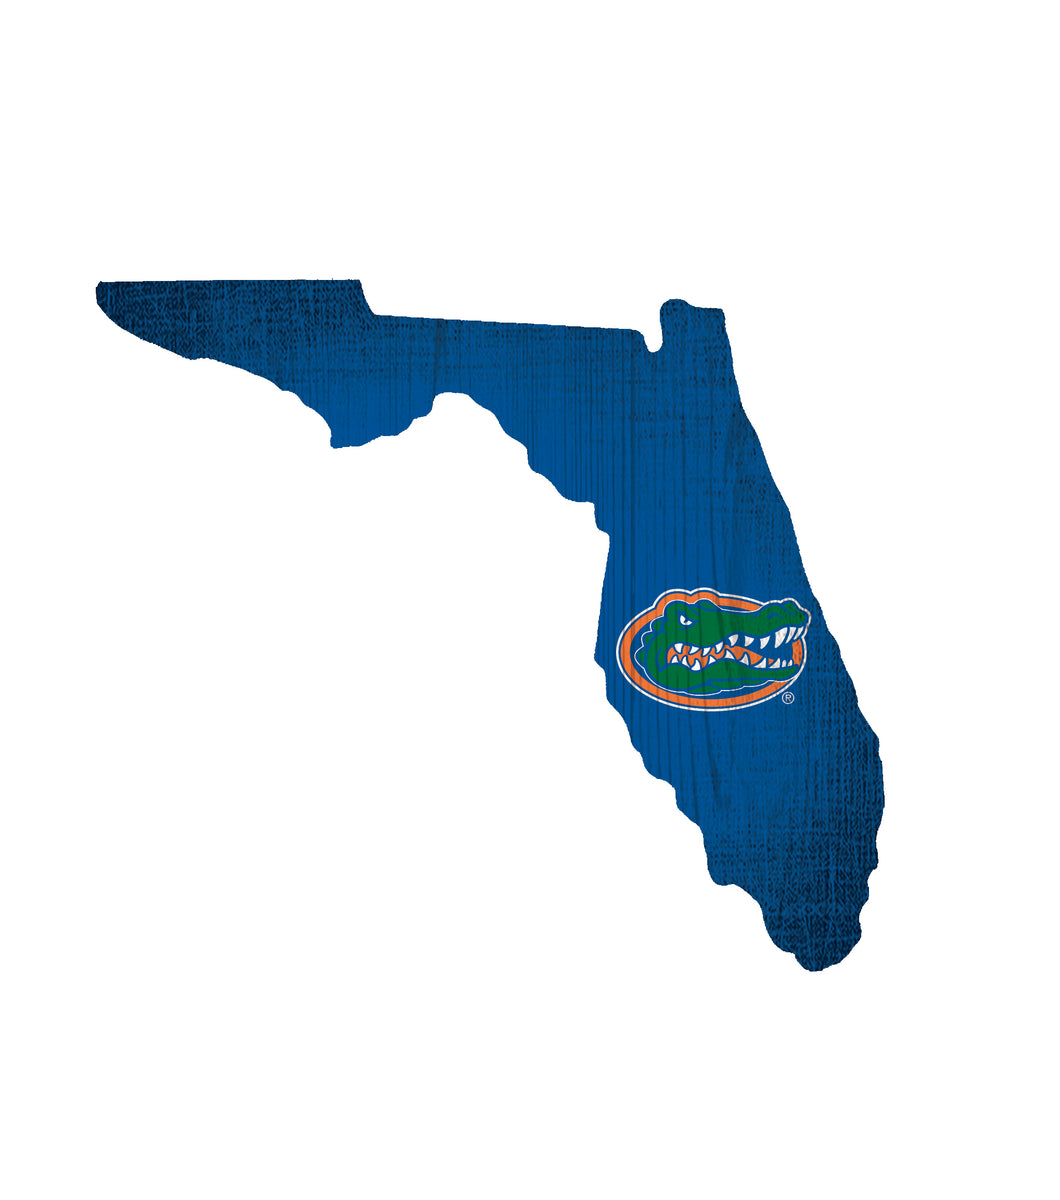 Florida Gators State Wood Sign